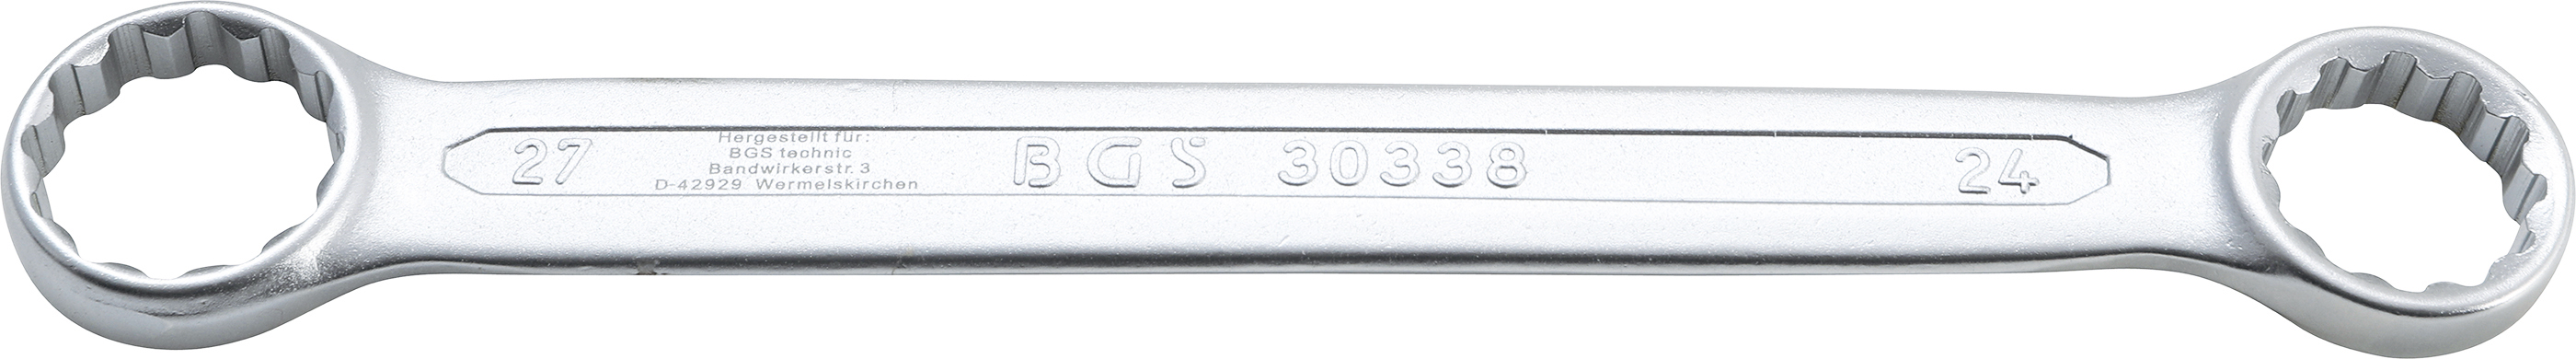 BGS 30338 Cheie inelară dublă 24 x 27 mm extra plată